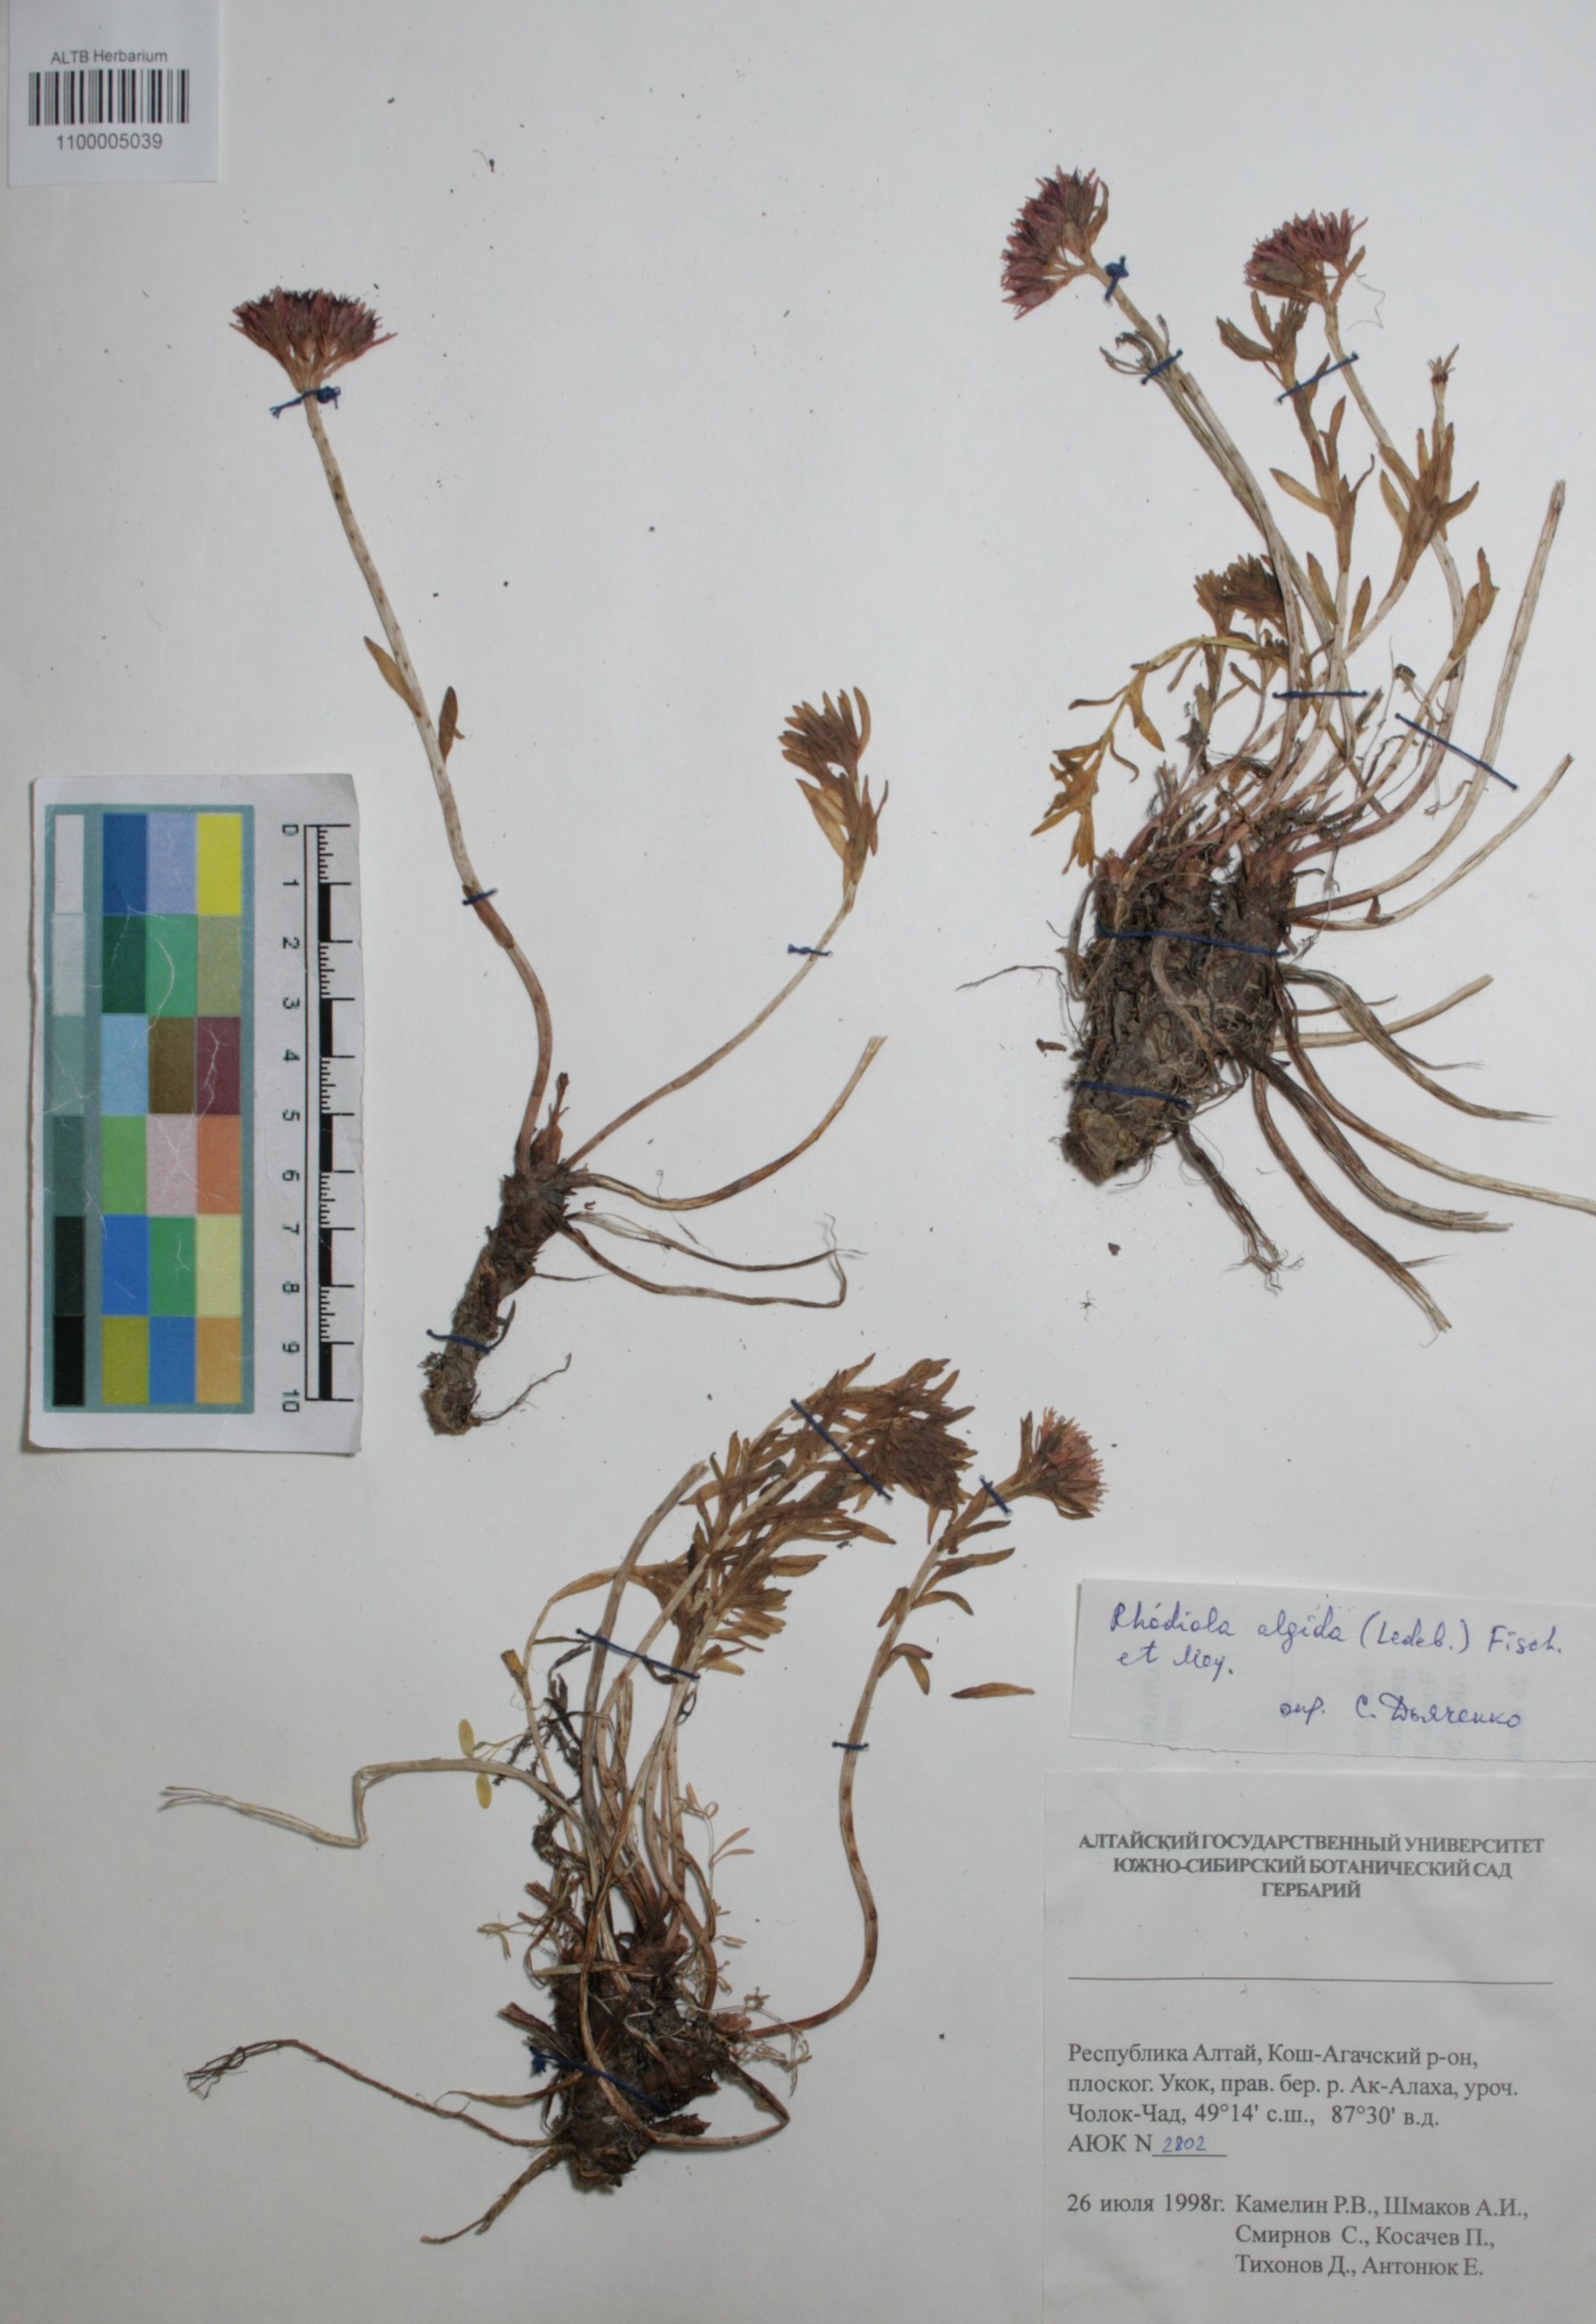 Crassulaceae,Rhodiola algida (Ledeb.) Fisch. & C.A. Mey.